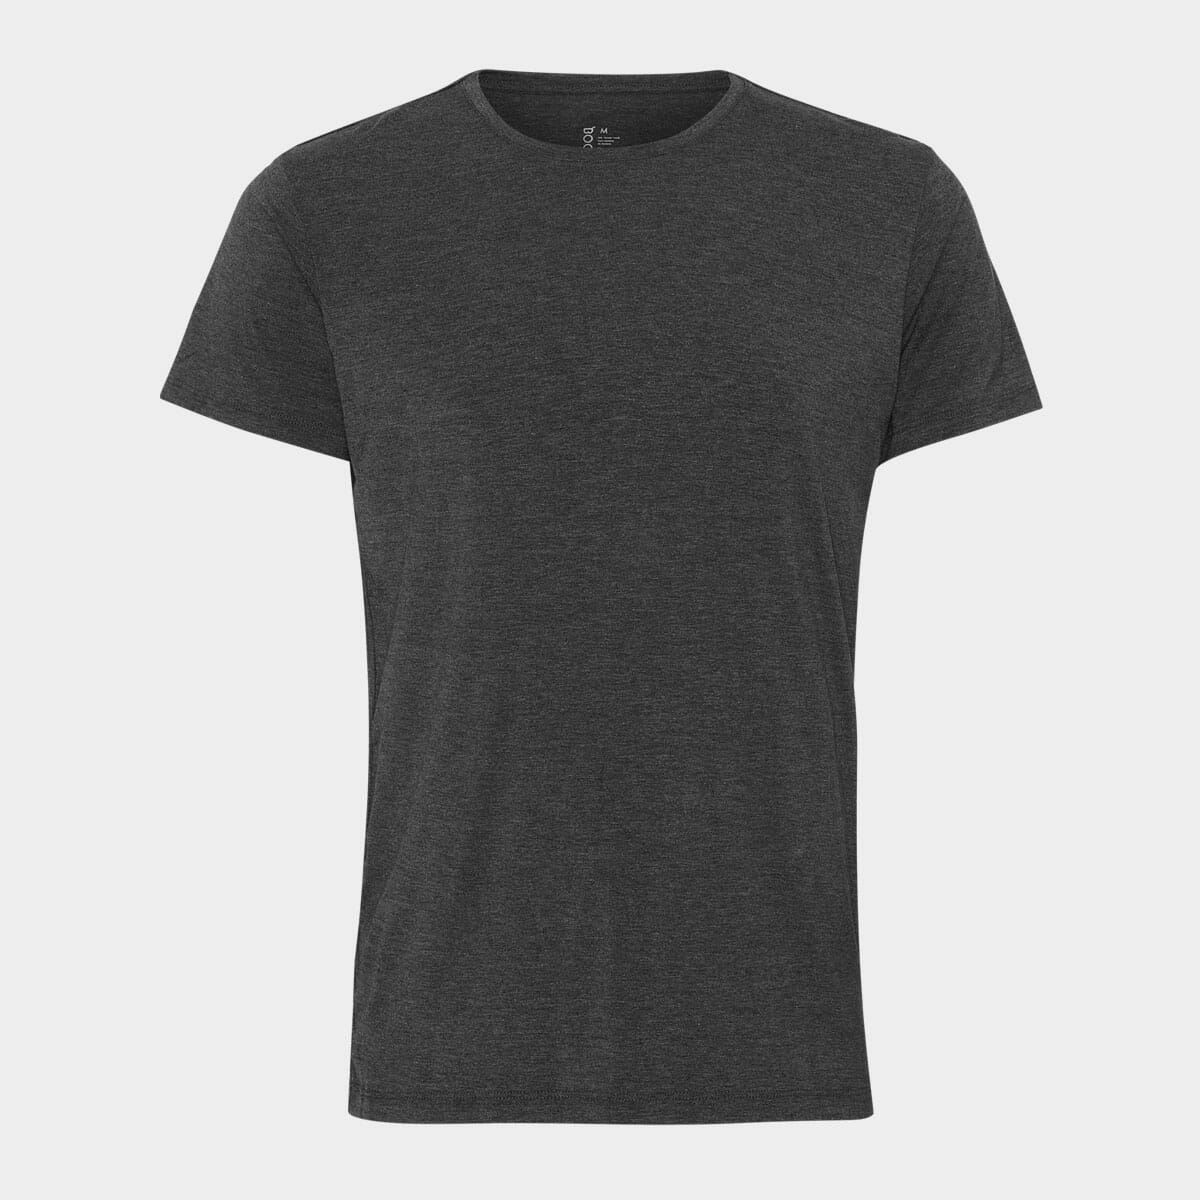 Se Boody T-Shirt Herre mørk grå str. XL rund hals, 1stk hos Bambustøj.dk